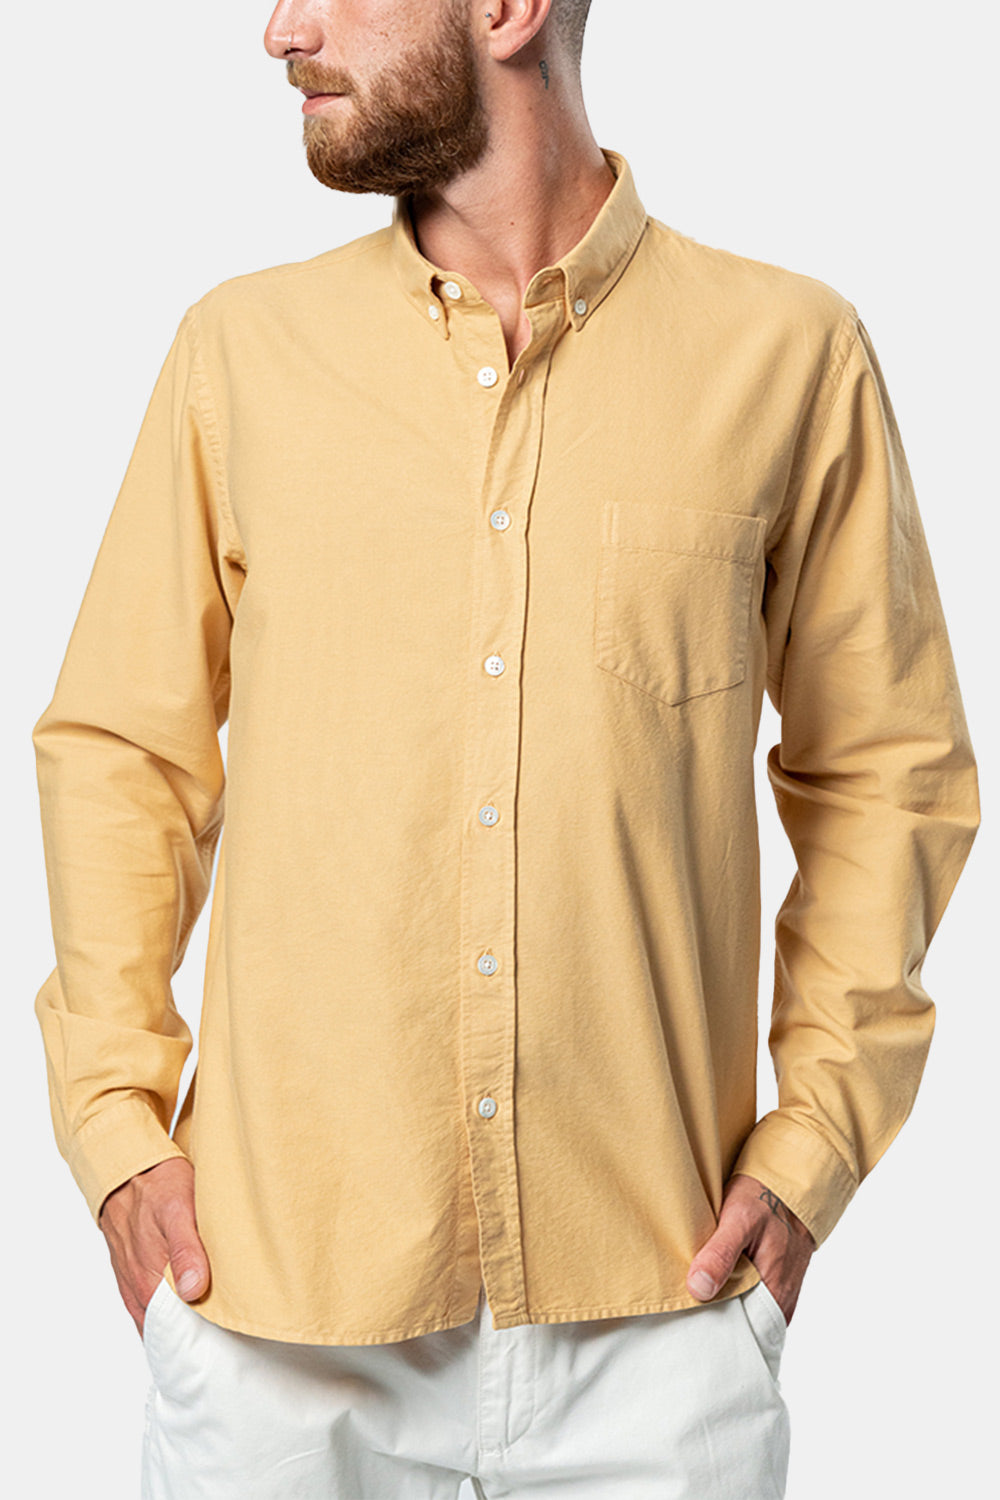 La Paz Branco Shirt (Sahara Yellow)